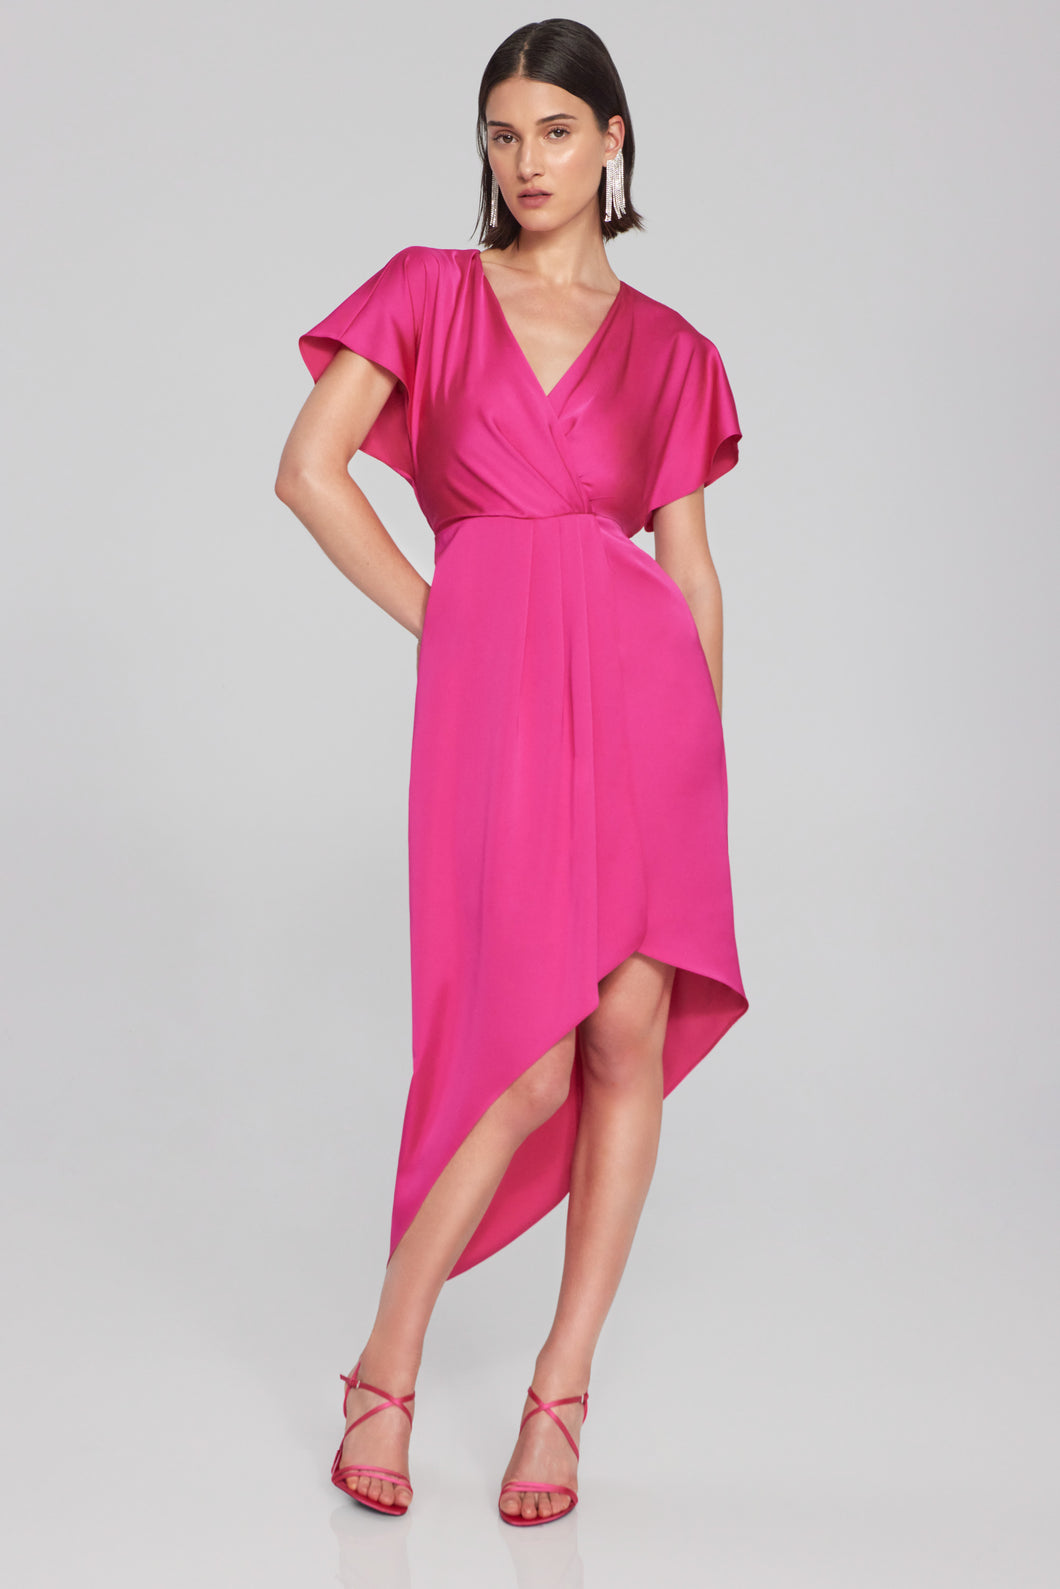 Joseph Ribkoff - Shocking pink satin dress